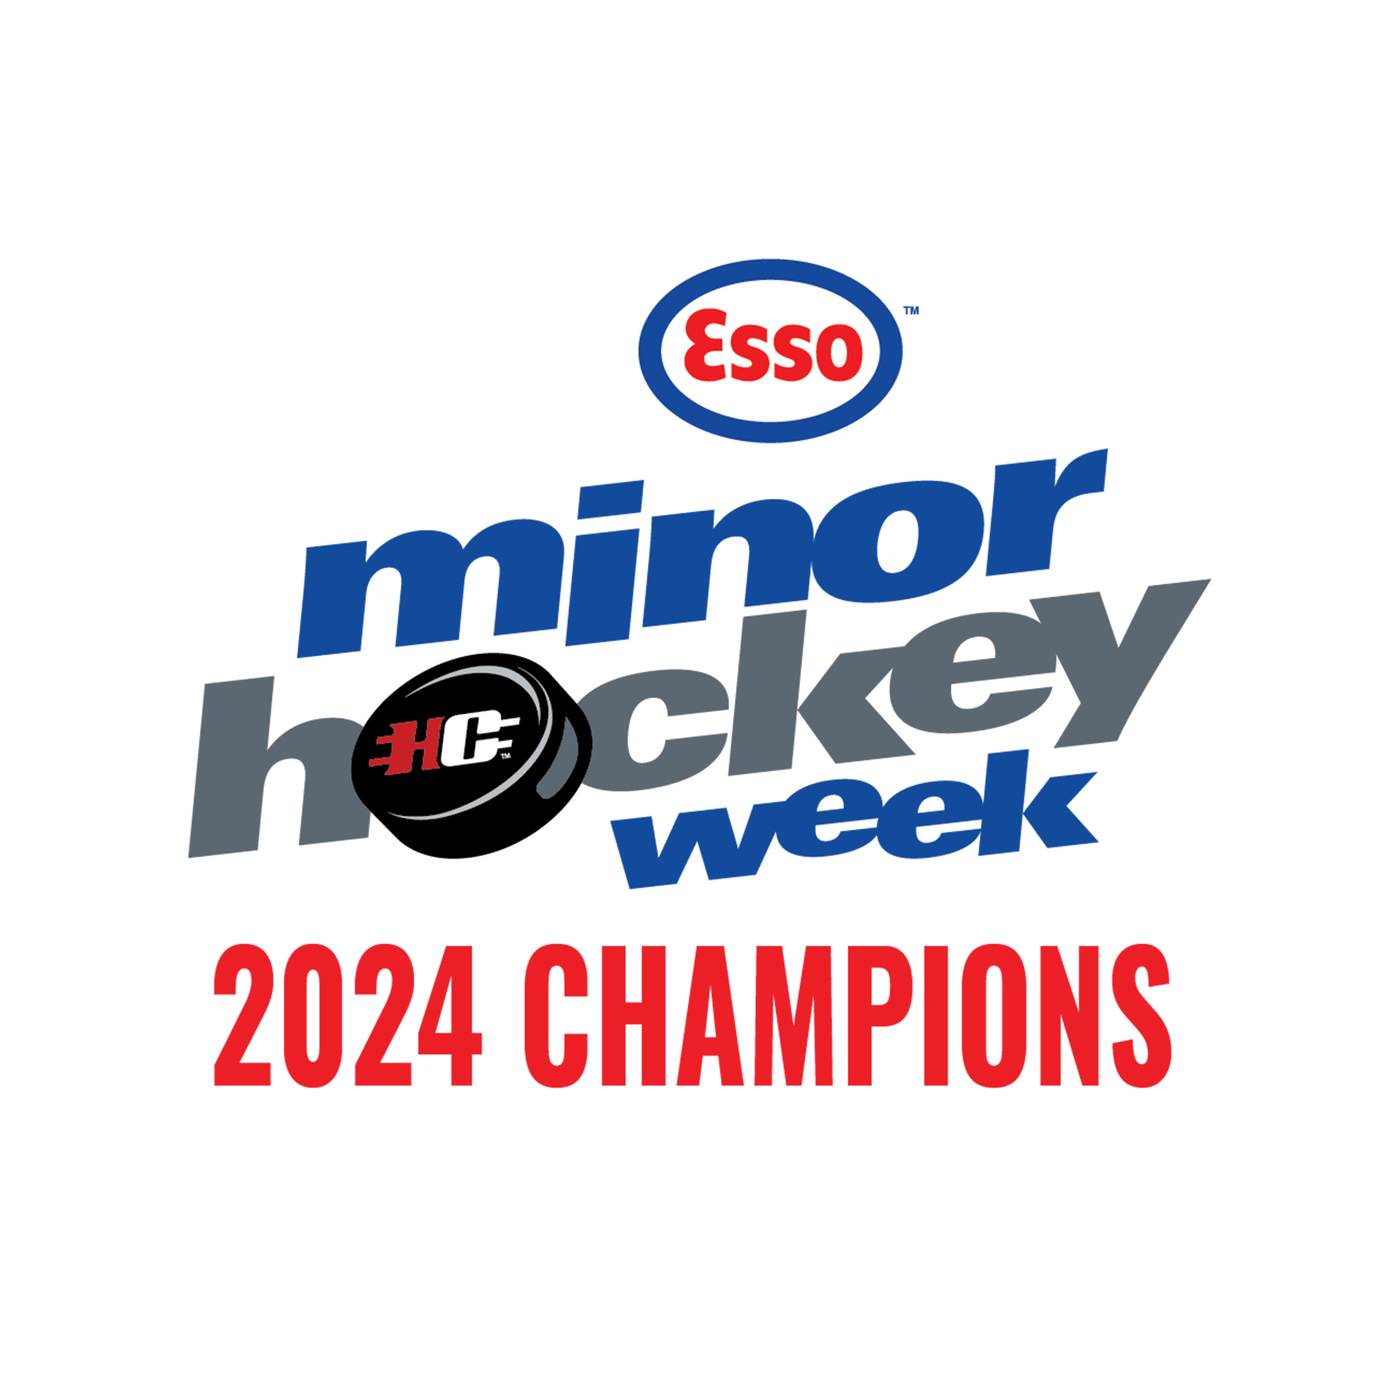 Esso Minor Hockey Week Champions